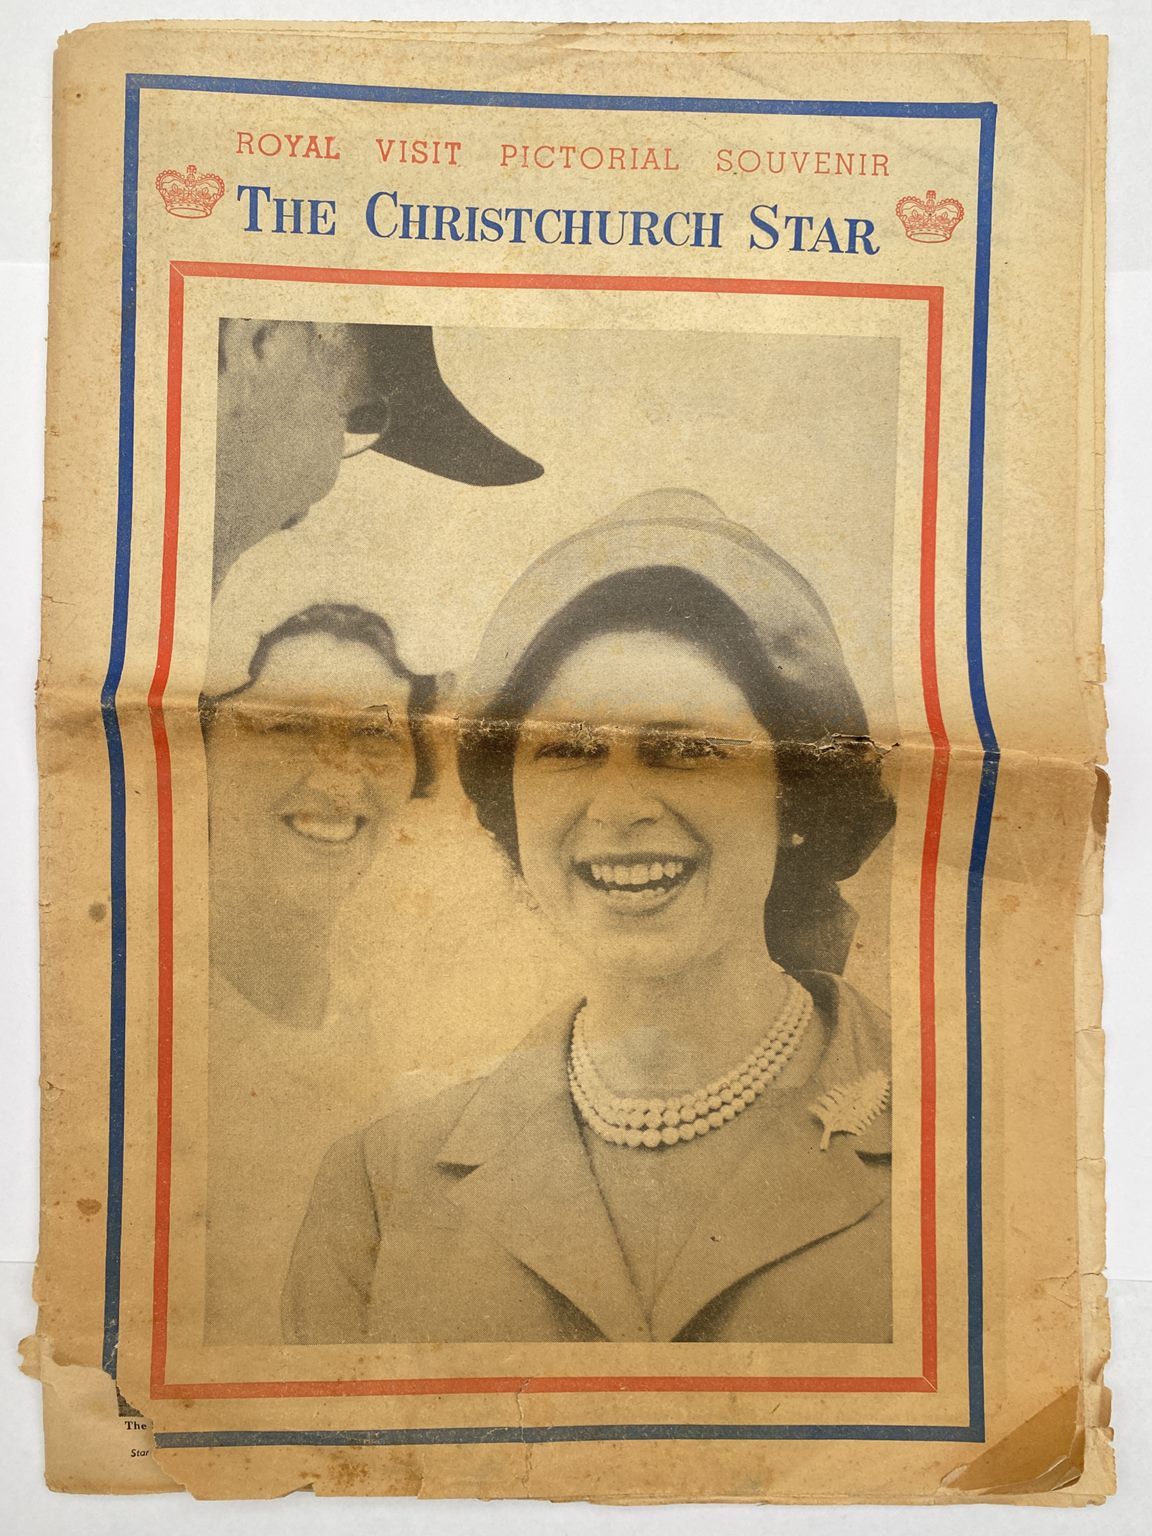 OLD NEWSPAPER: The Christchurch Star - Royal Visit Souvenir 19 February 1963